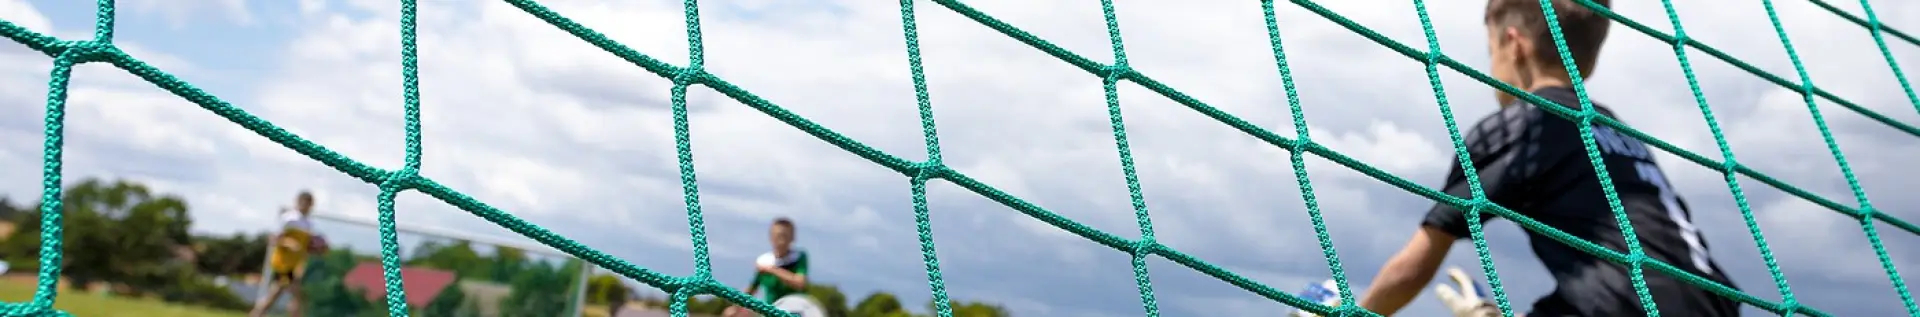 Fence basketball net - Cod. BSRE0301N